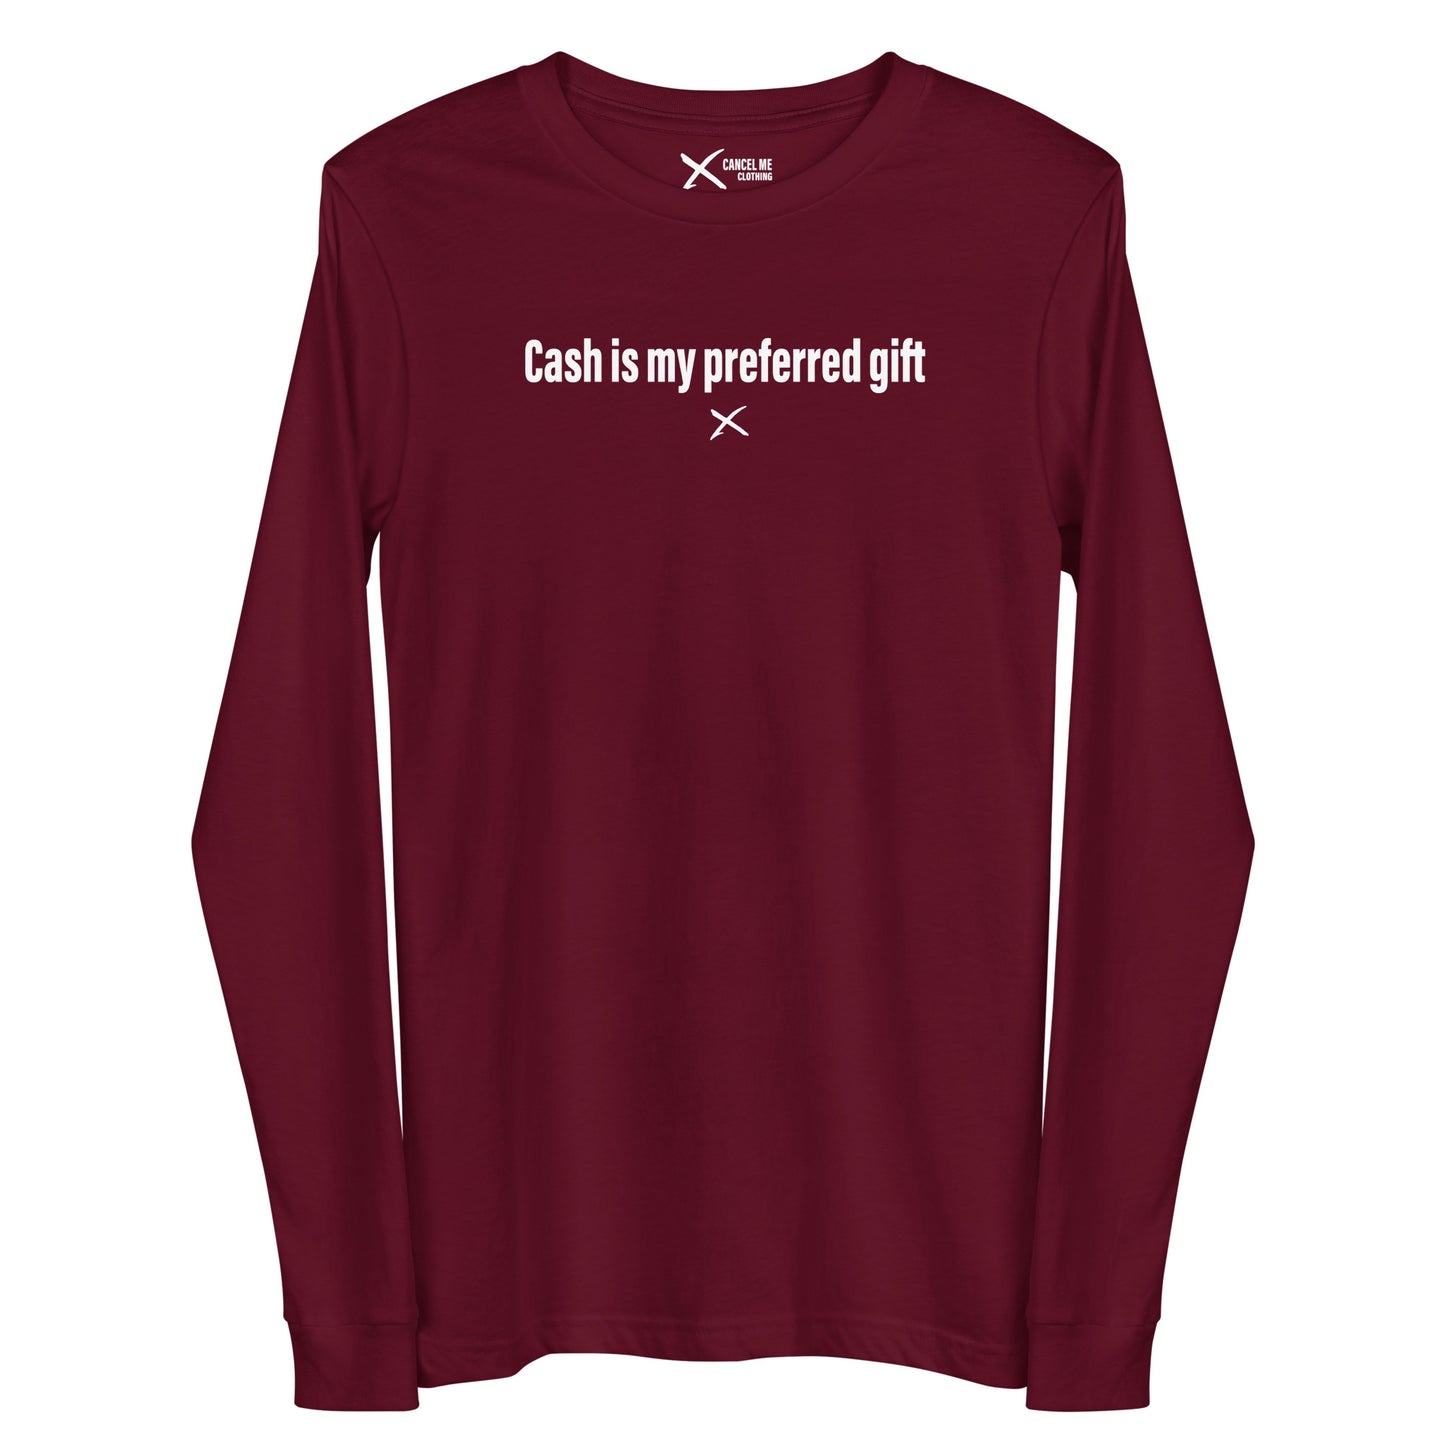 Cash is my preferred gift - Longsleeve